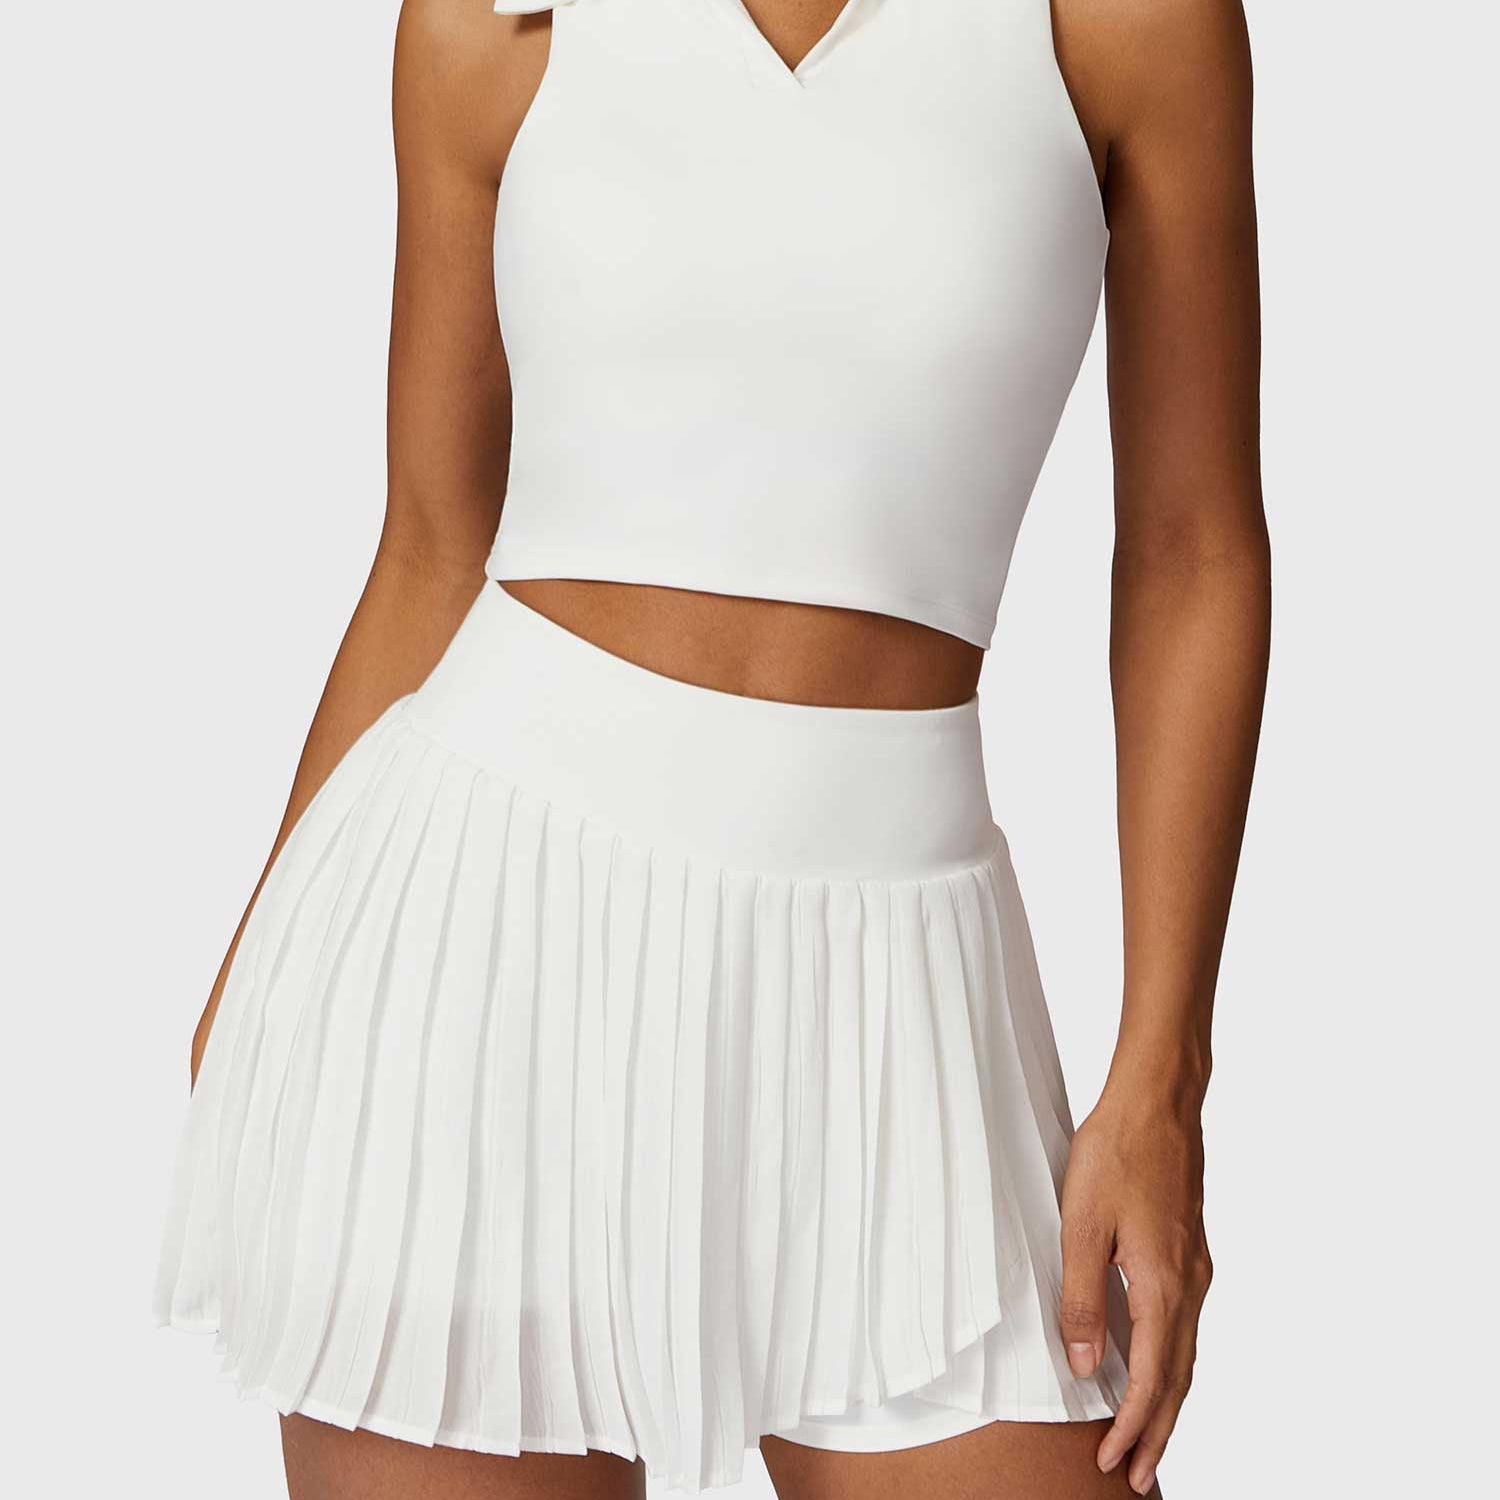 Yeoreo Crop Top Tennis Skirt Sets